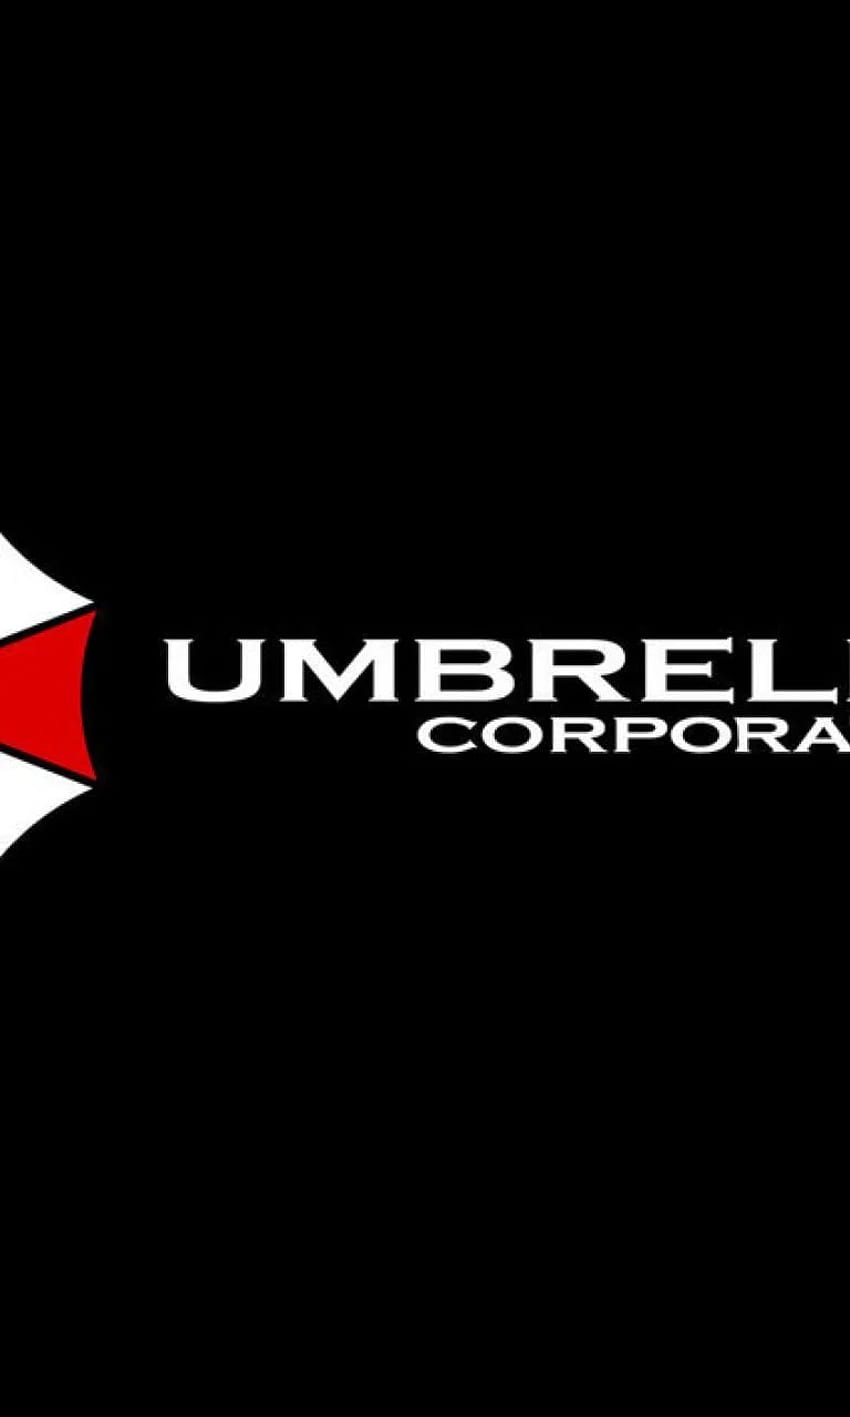 Umbrella Corporation logo, Vector Logo of Umbrella Corporation brand free  download (eps, ai, png, cdr) formats